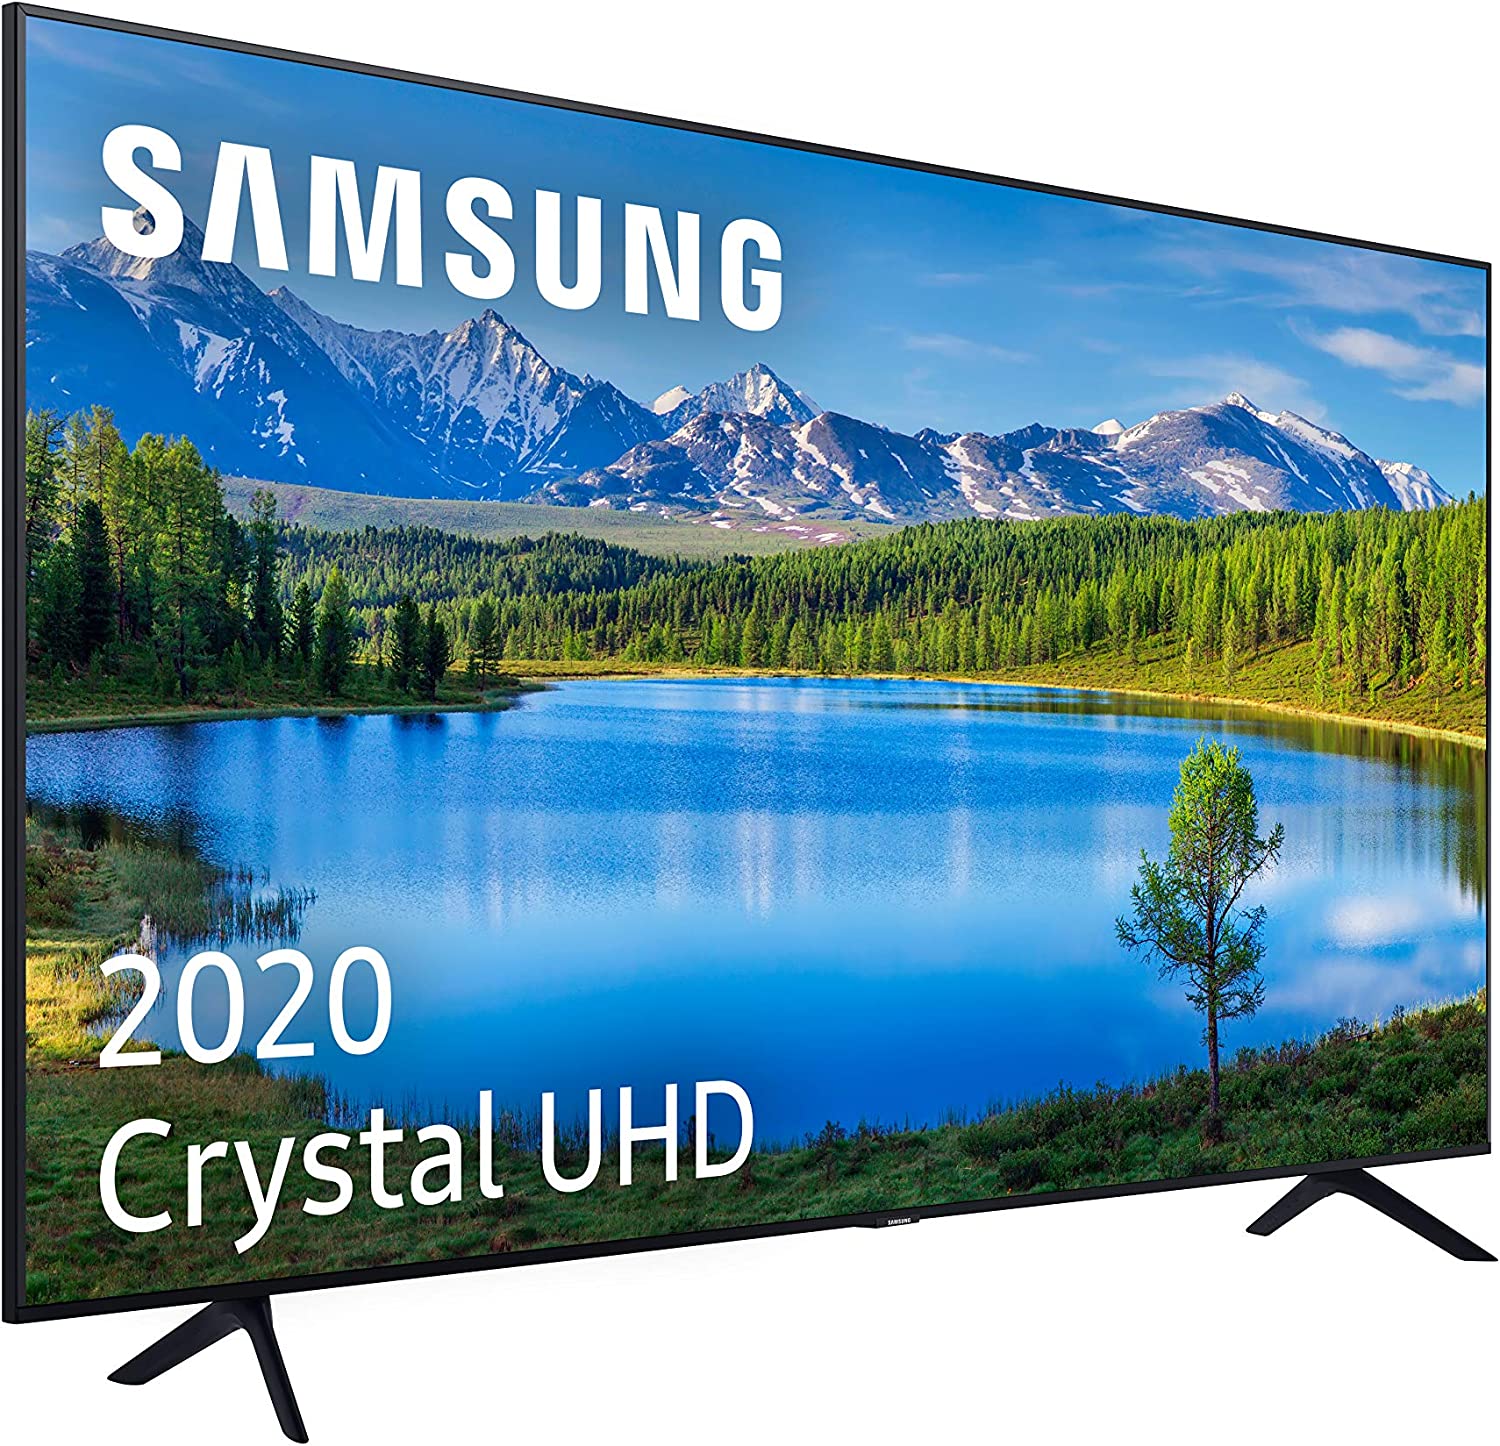 Samsung Crystal UHD 2020 43TU7095 - Smart TV de 43"